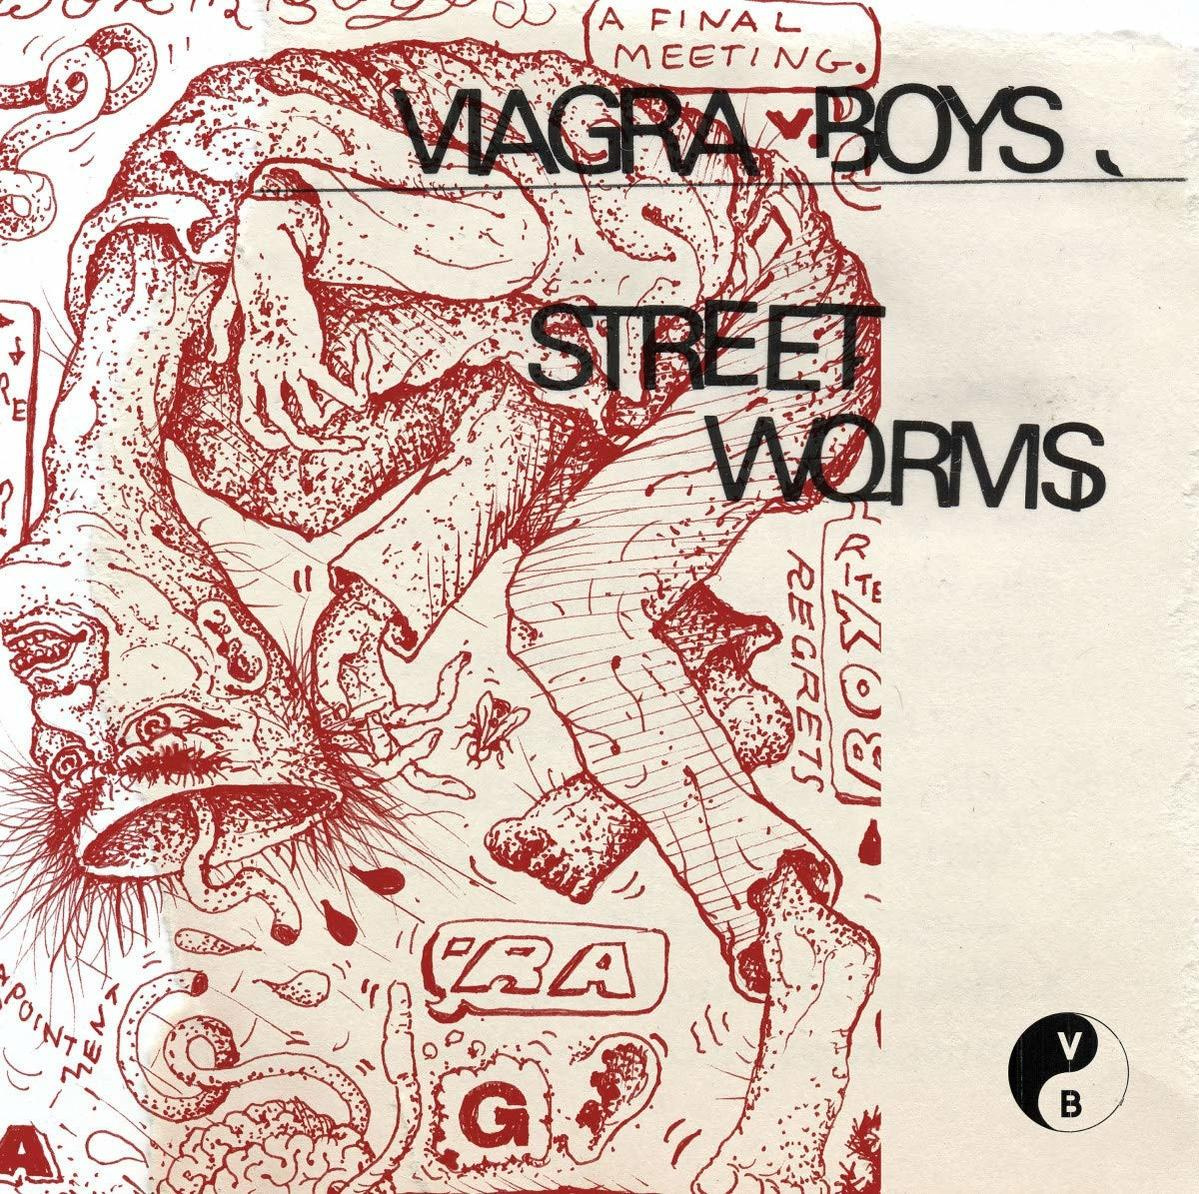 Viagra Boys Street Worms - - (Vinyl)